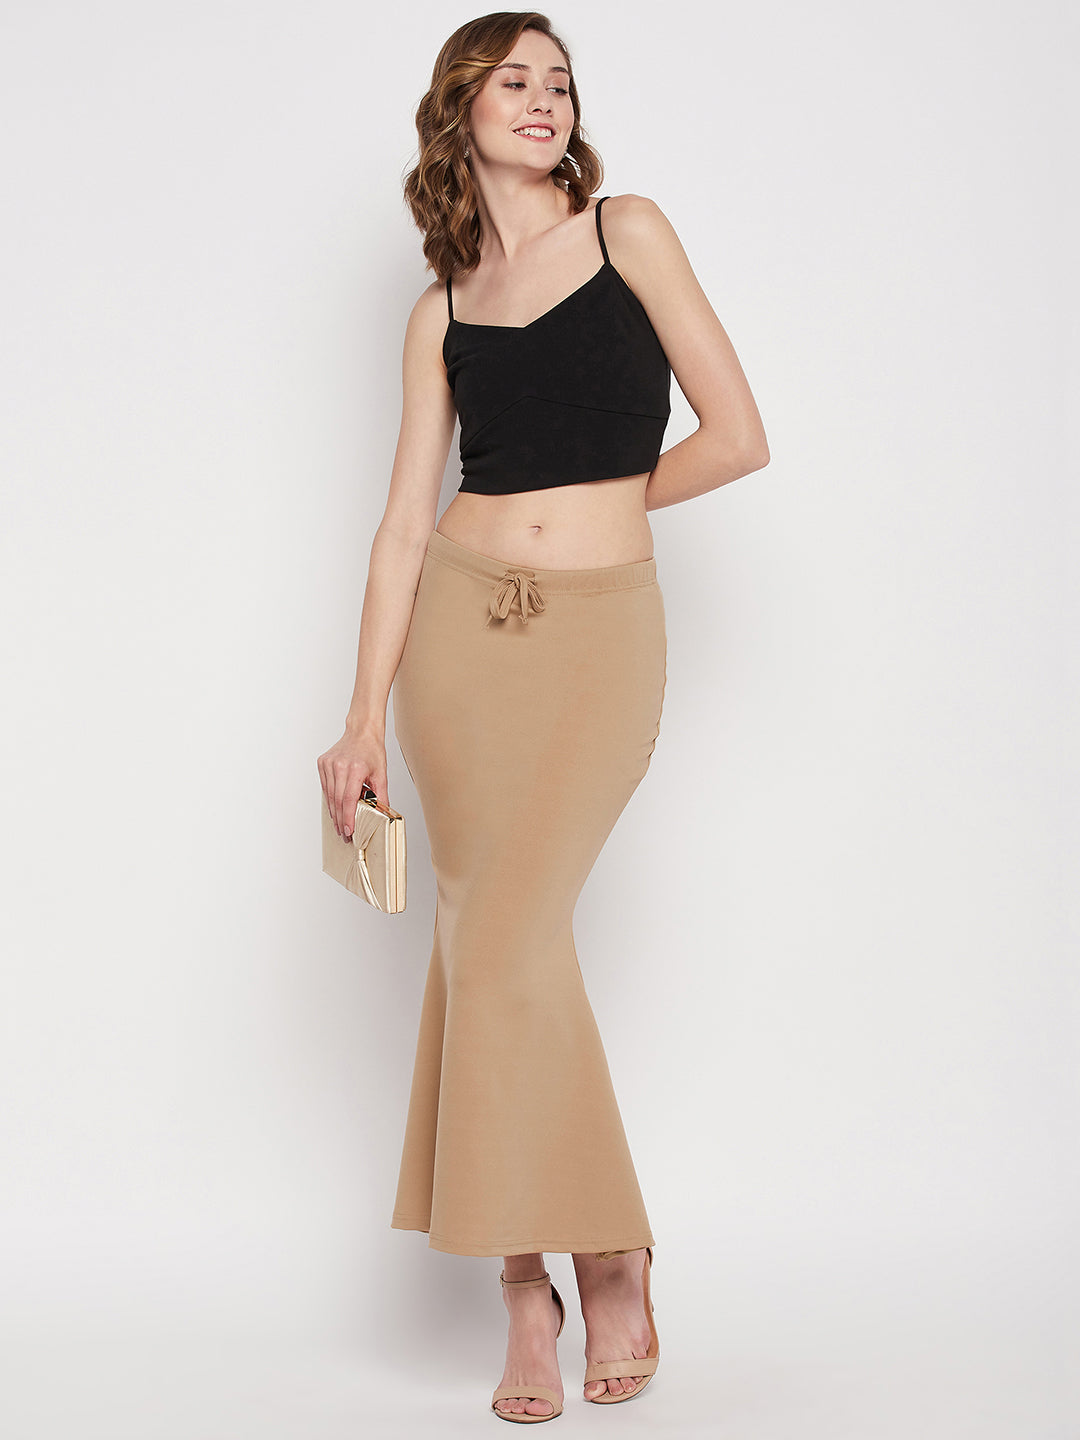  Lycra Saree Shapewear Petticoat For Women, Cotton